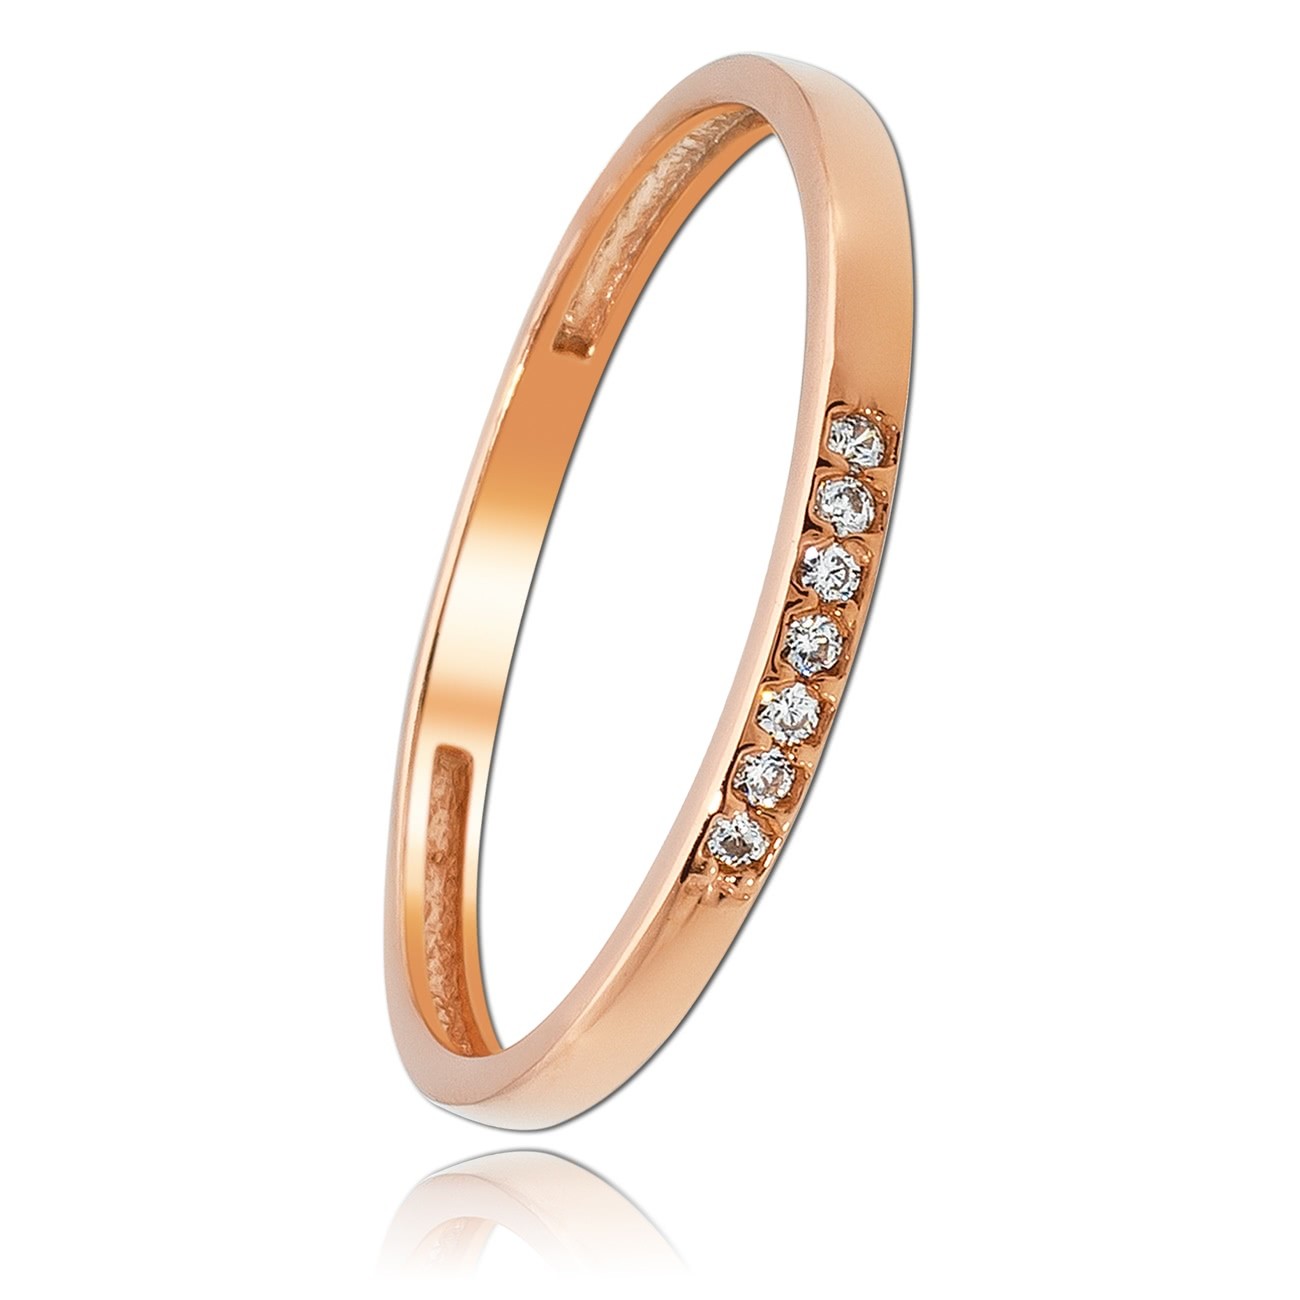 Balia Damen Ring aus 333 Rosegold mit 7 Zirkonias Gr.54 BGR017R56